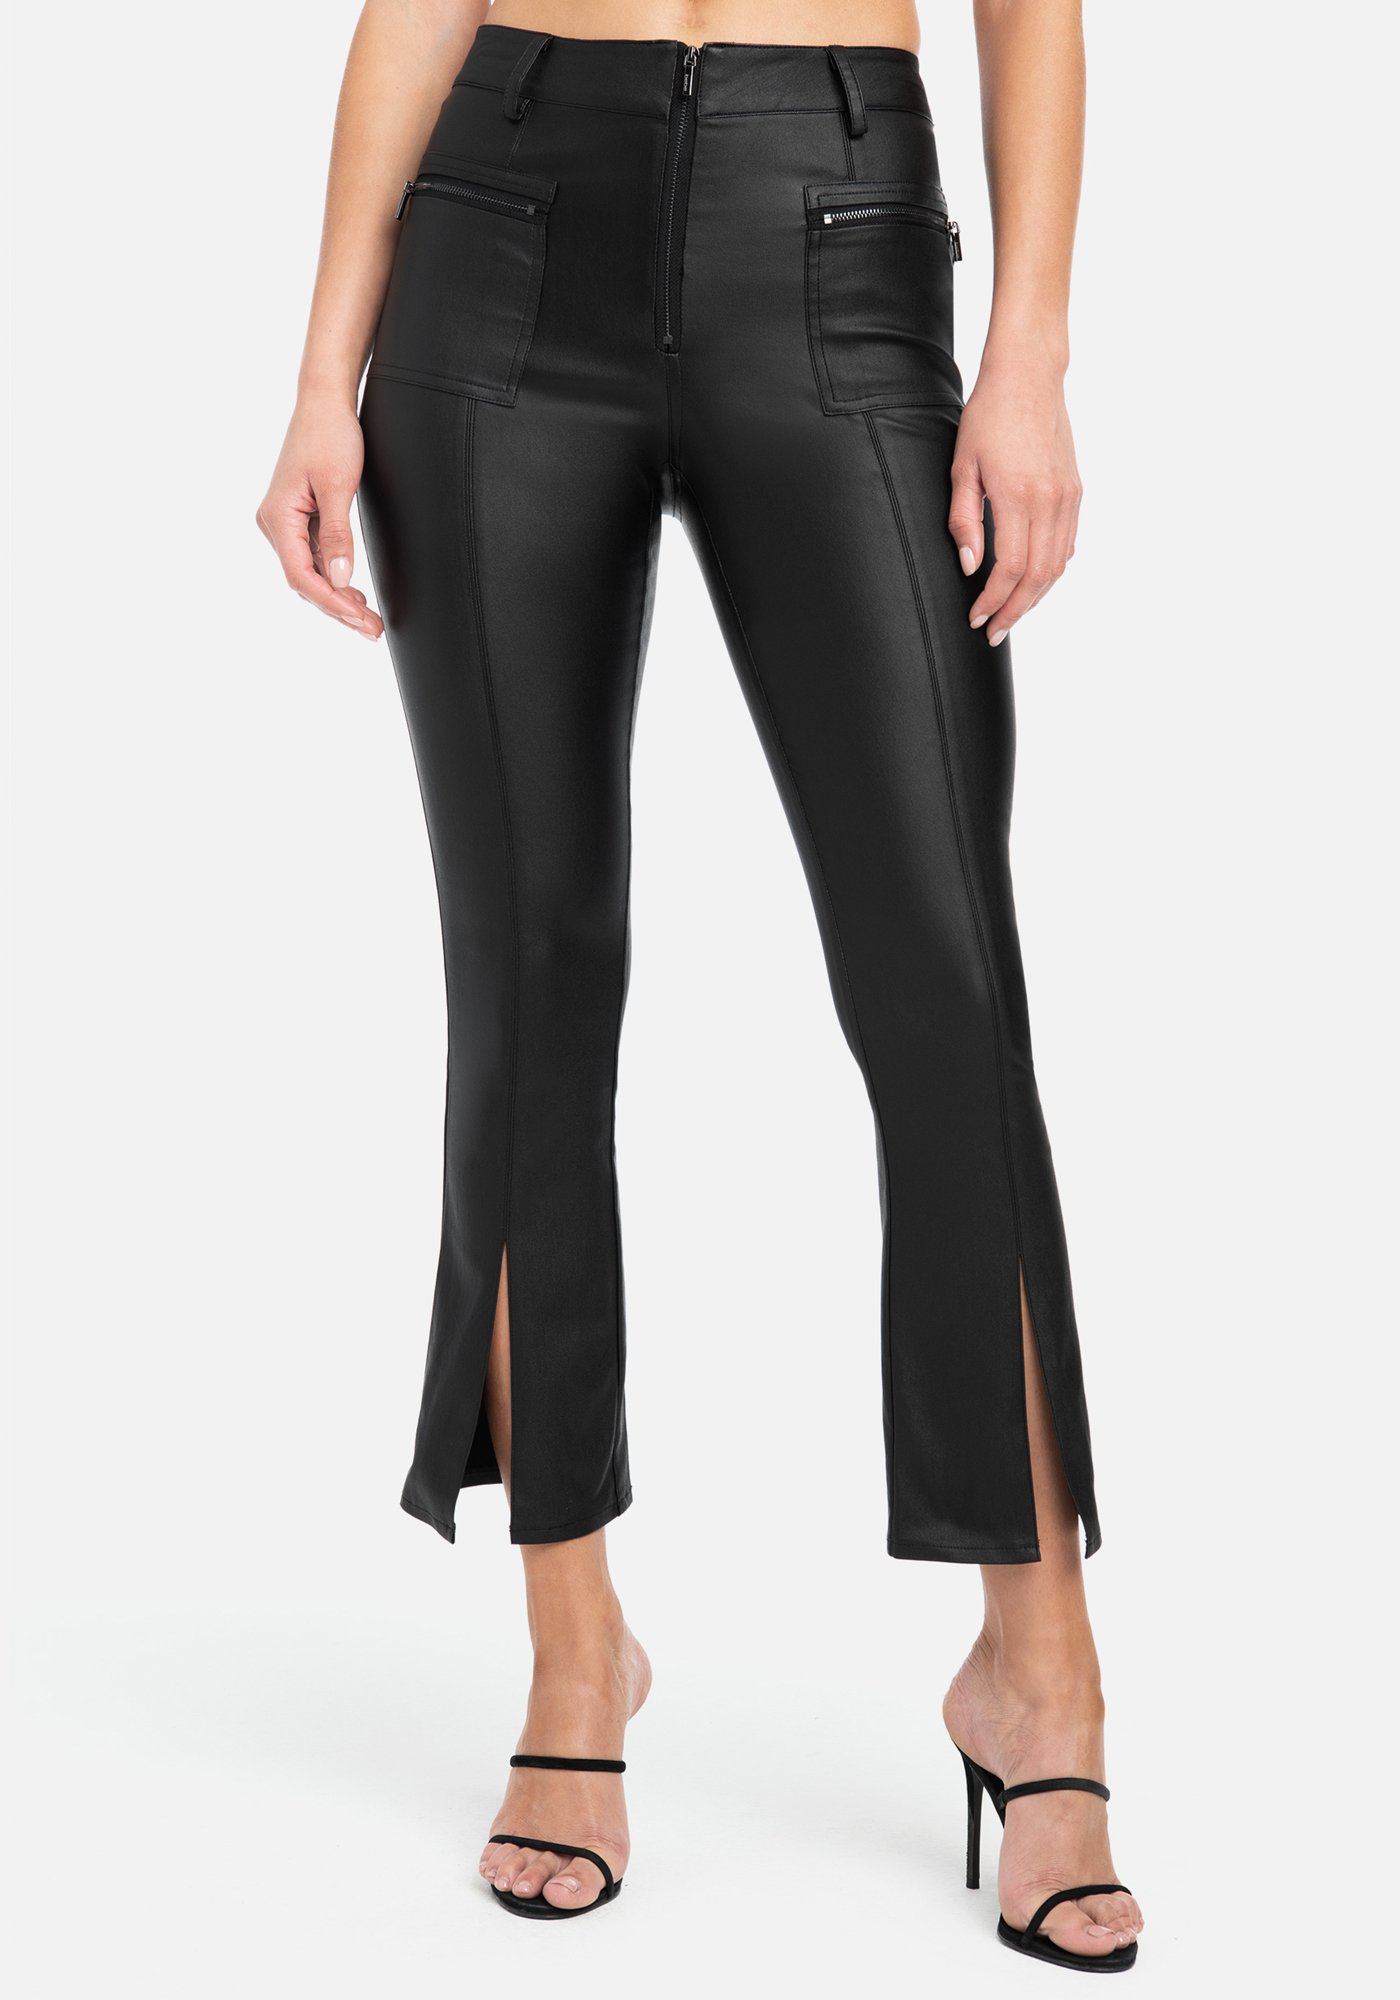 Bebe Women's Detail Front Slit Coated Pant, Size 6 in Black Spandex/Nylon